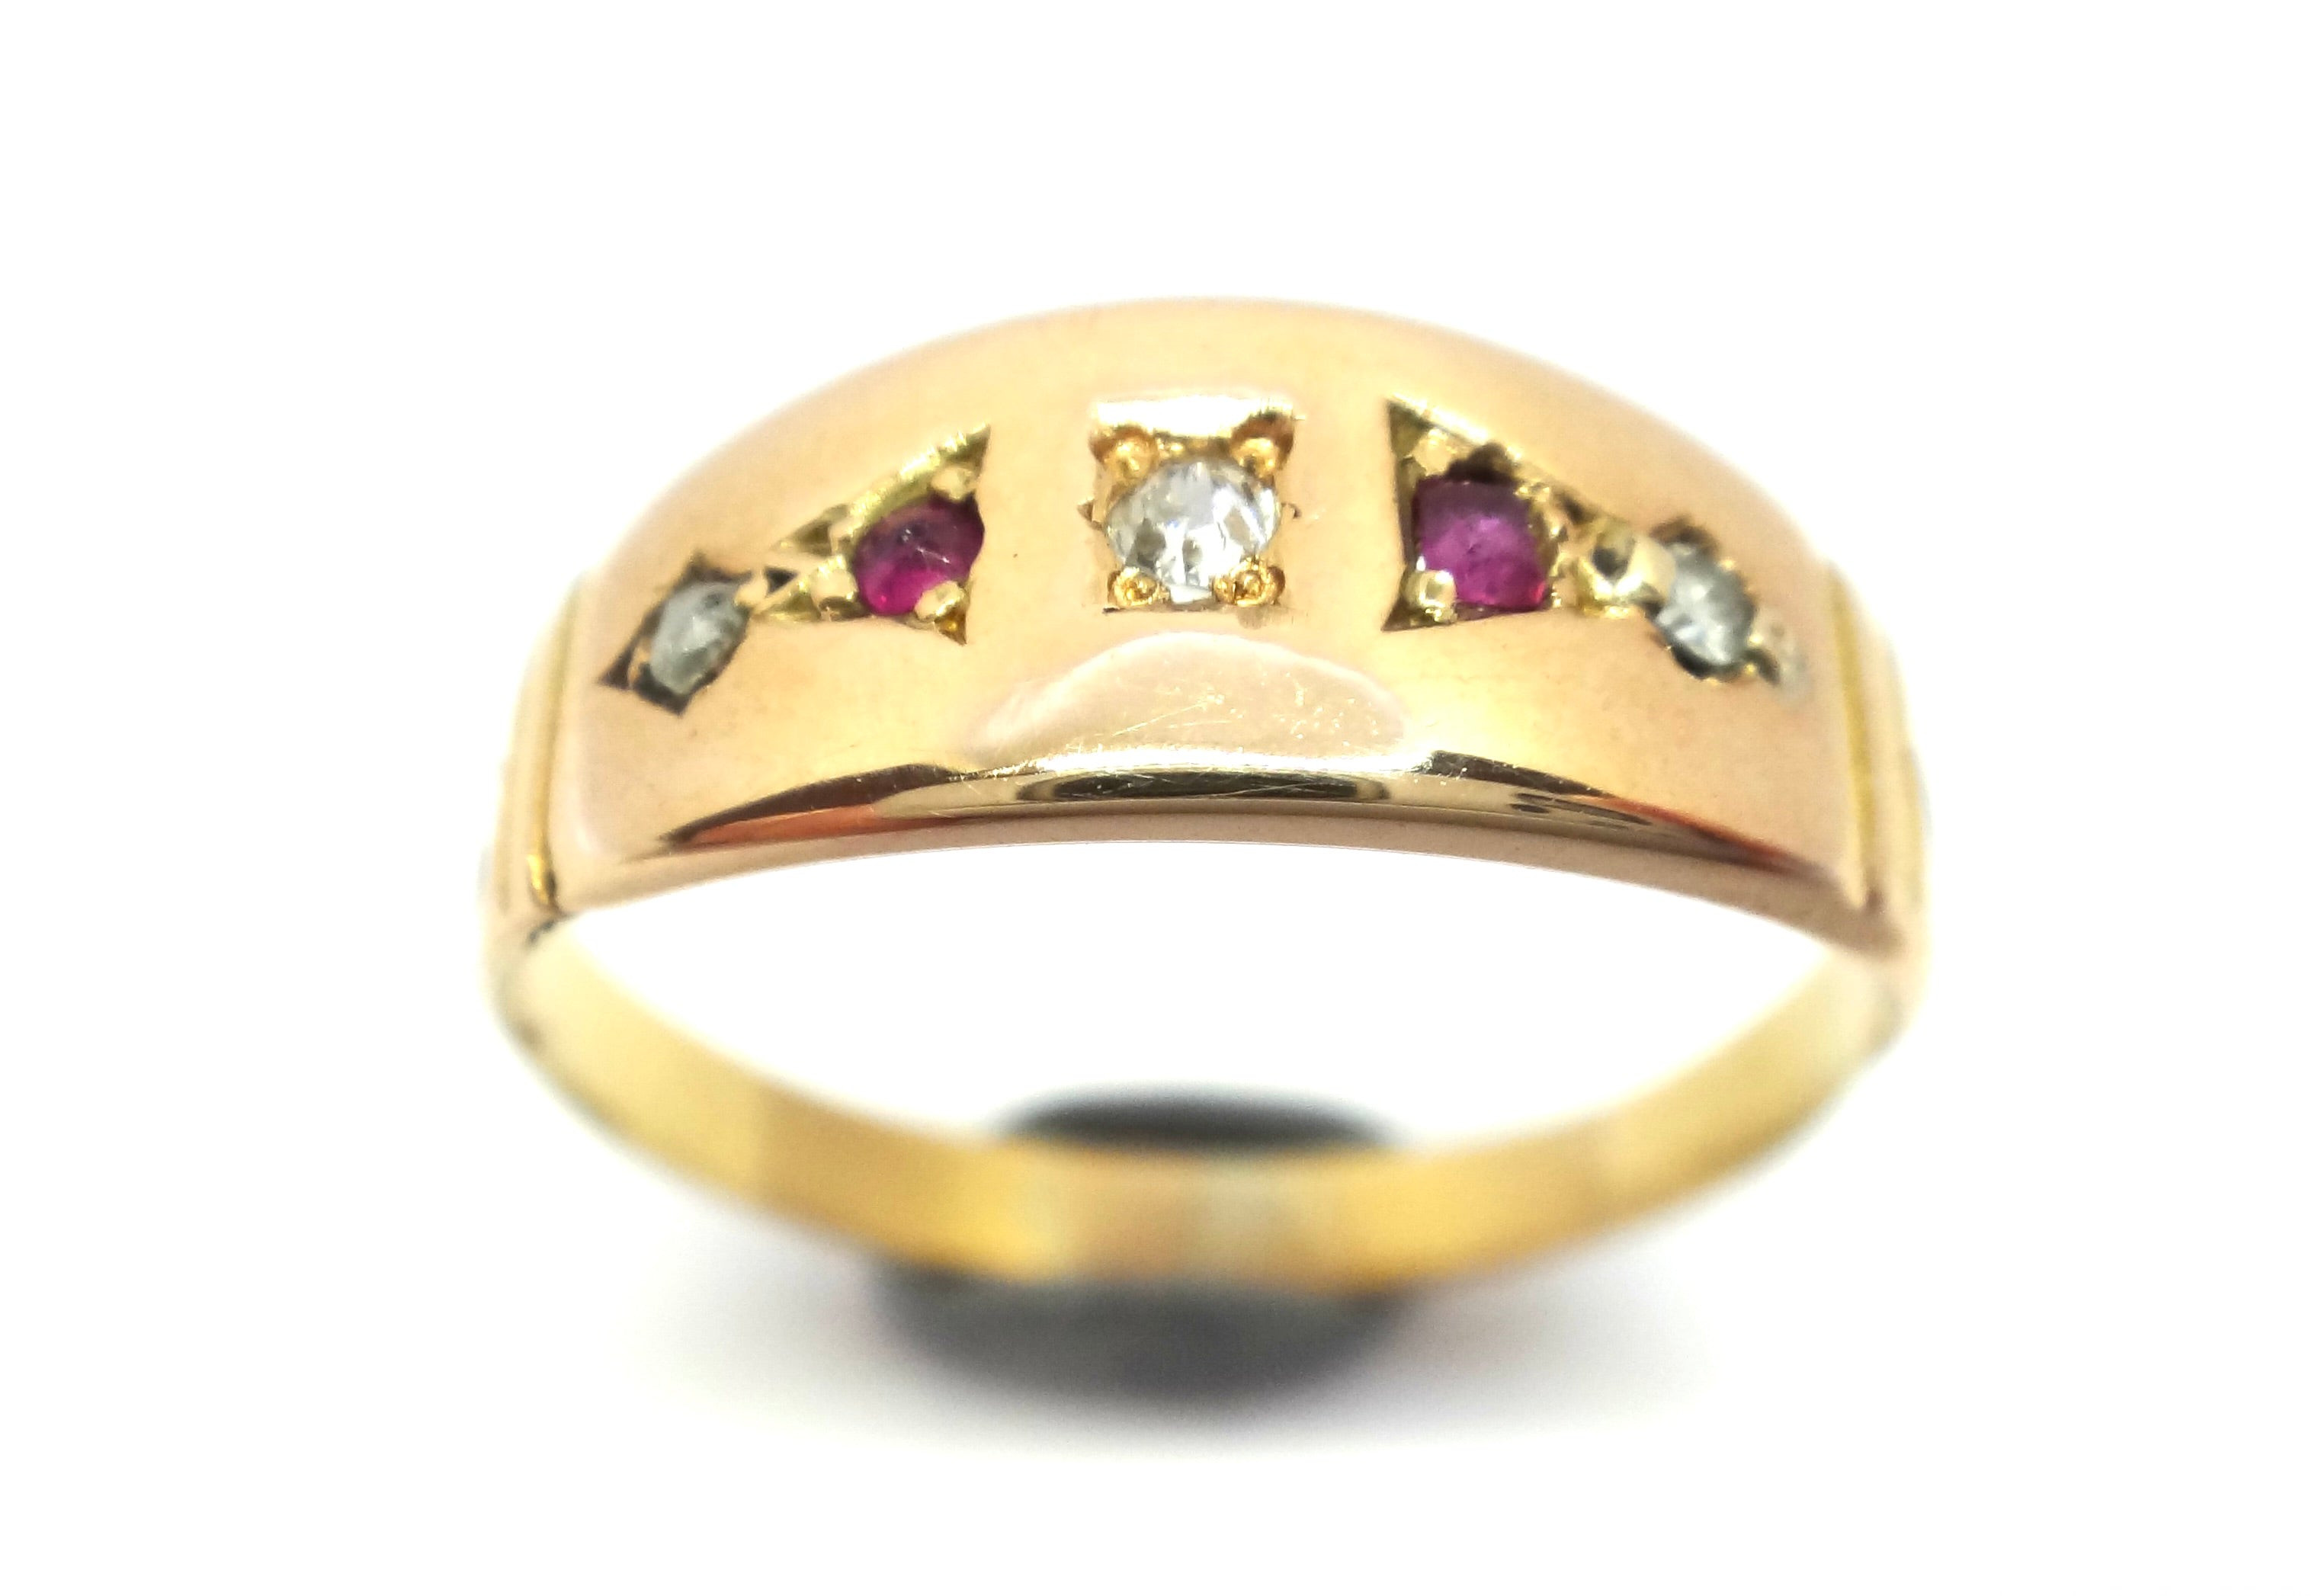 ANTIQUE 18ct Yellow Gold, Ruby & Diamond Ring c.1890